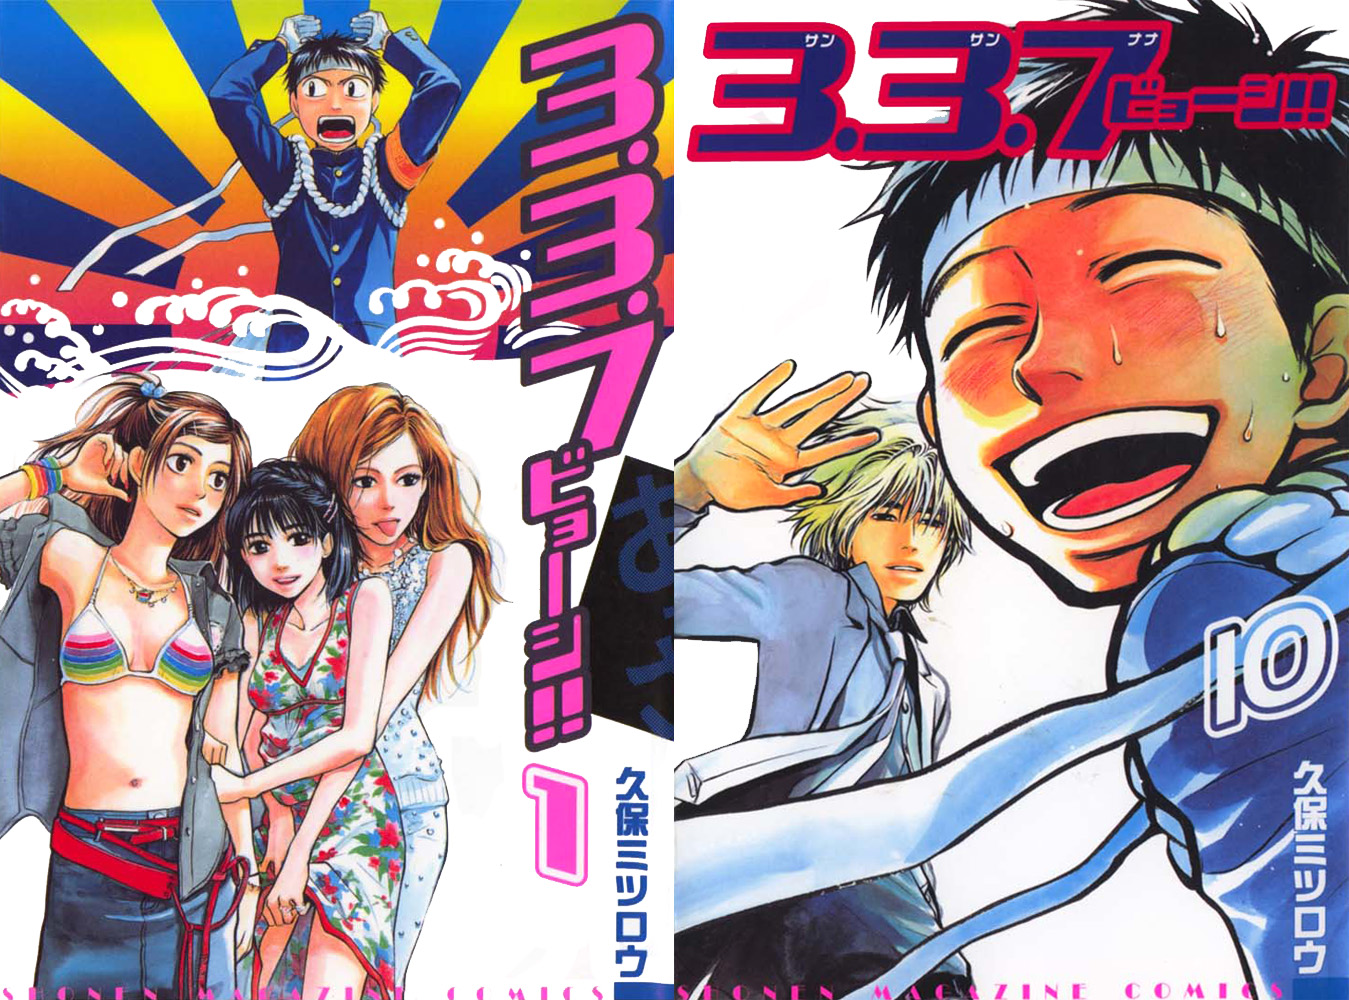 Download Free Raw Manga 3 3 7 Byoushi 3 3 7ビョーシ 10 Volume Complete At Rawcl